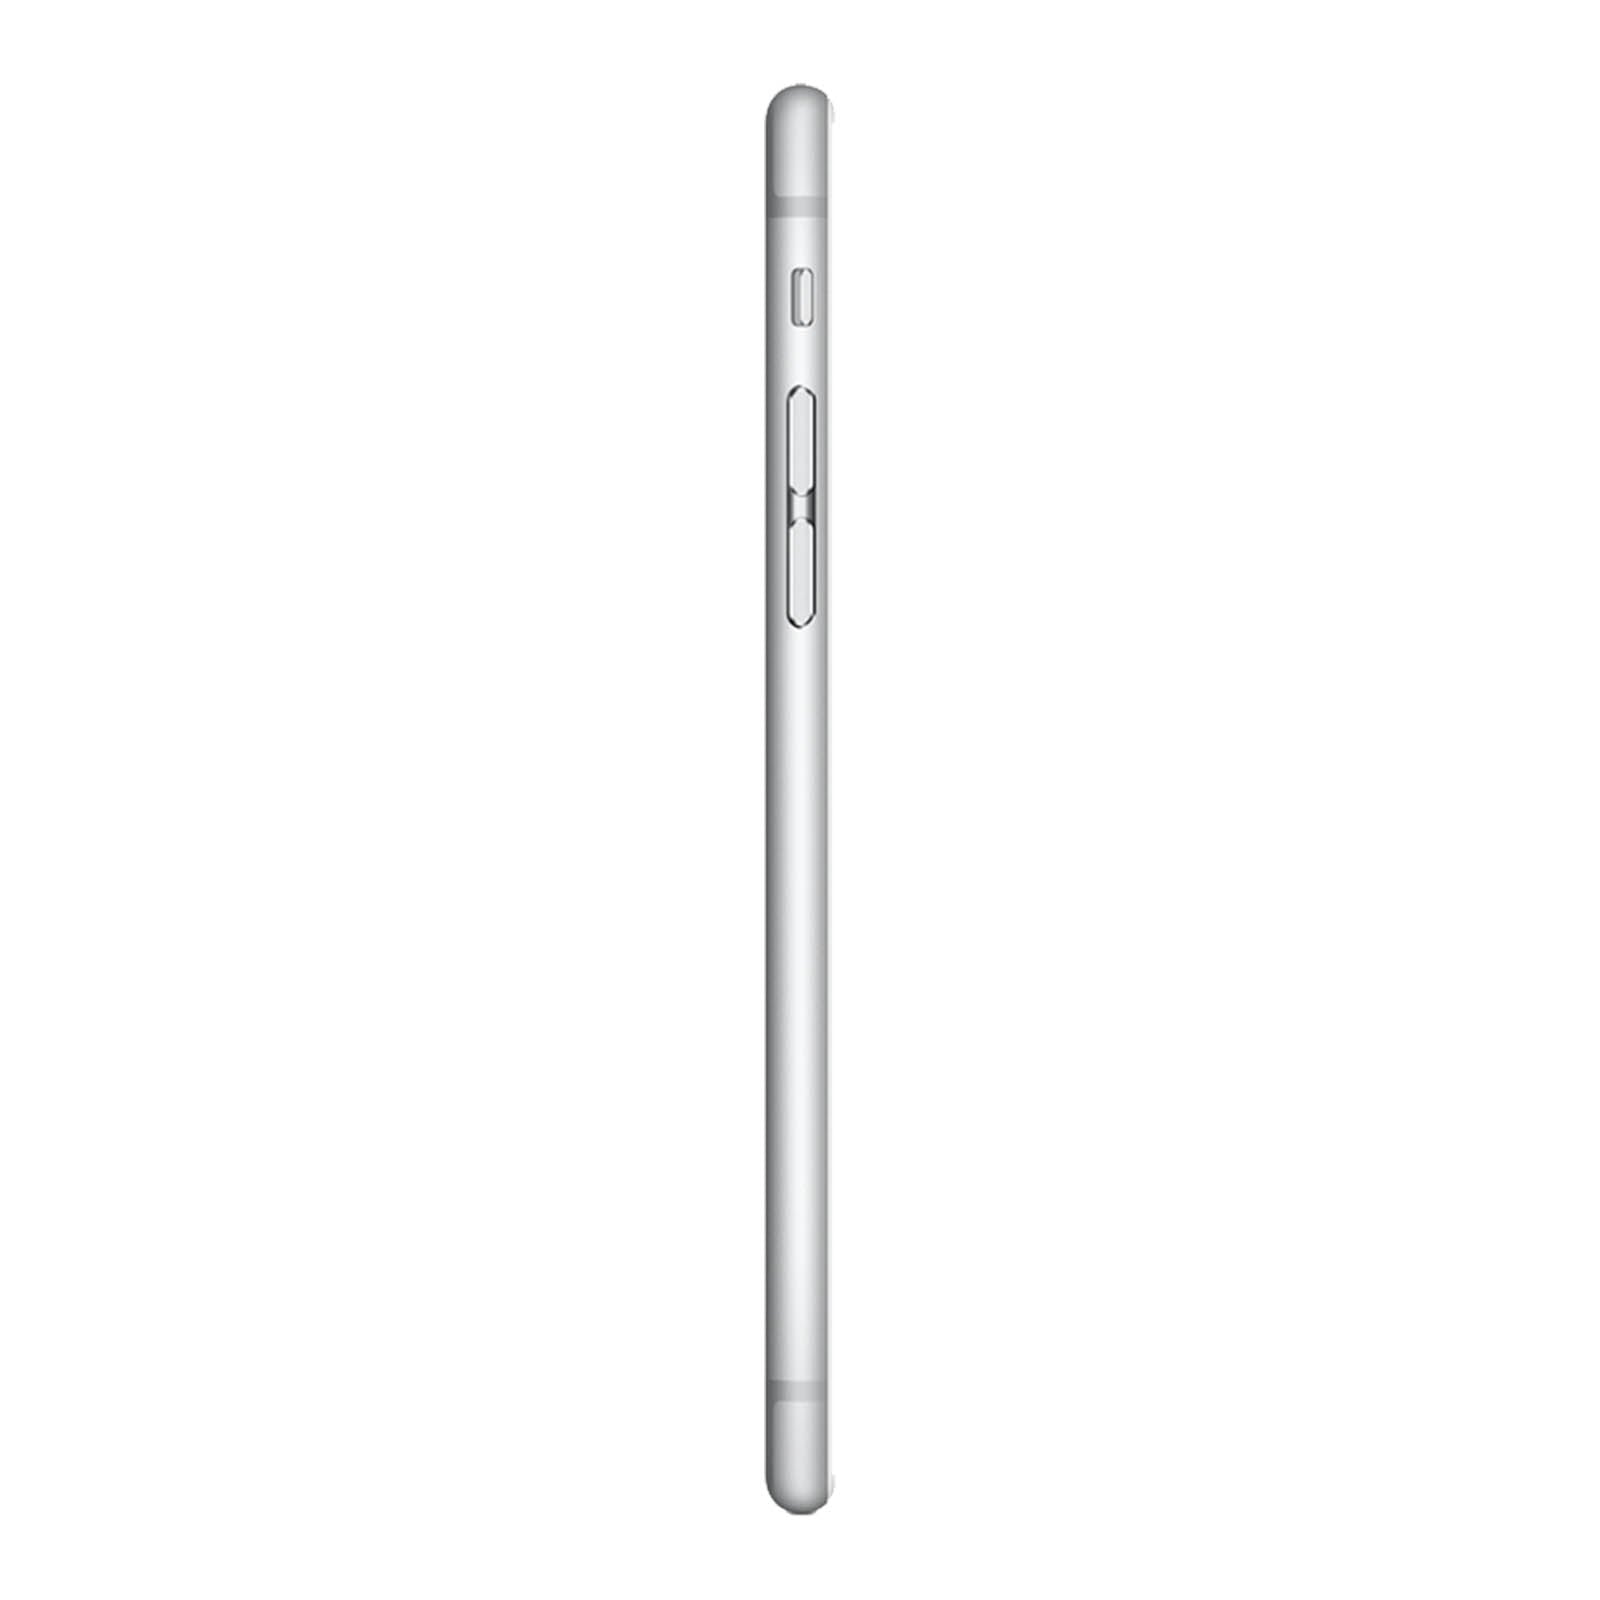 Apple iPhone 6 64GB Silver Pristine - Unlocked